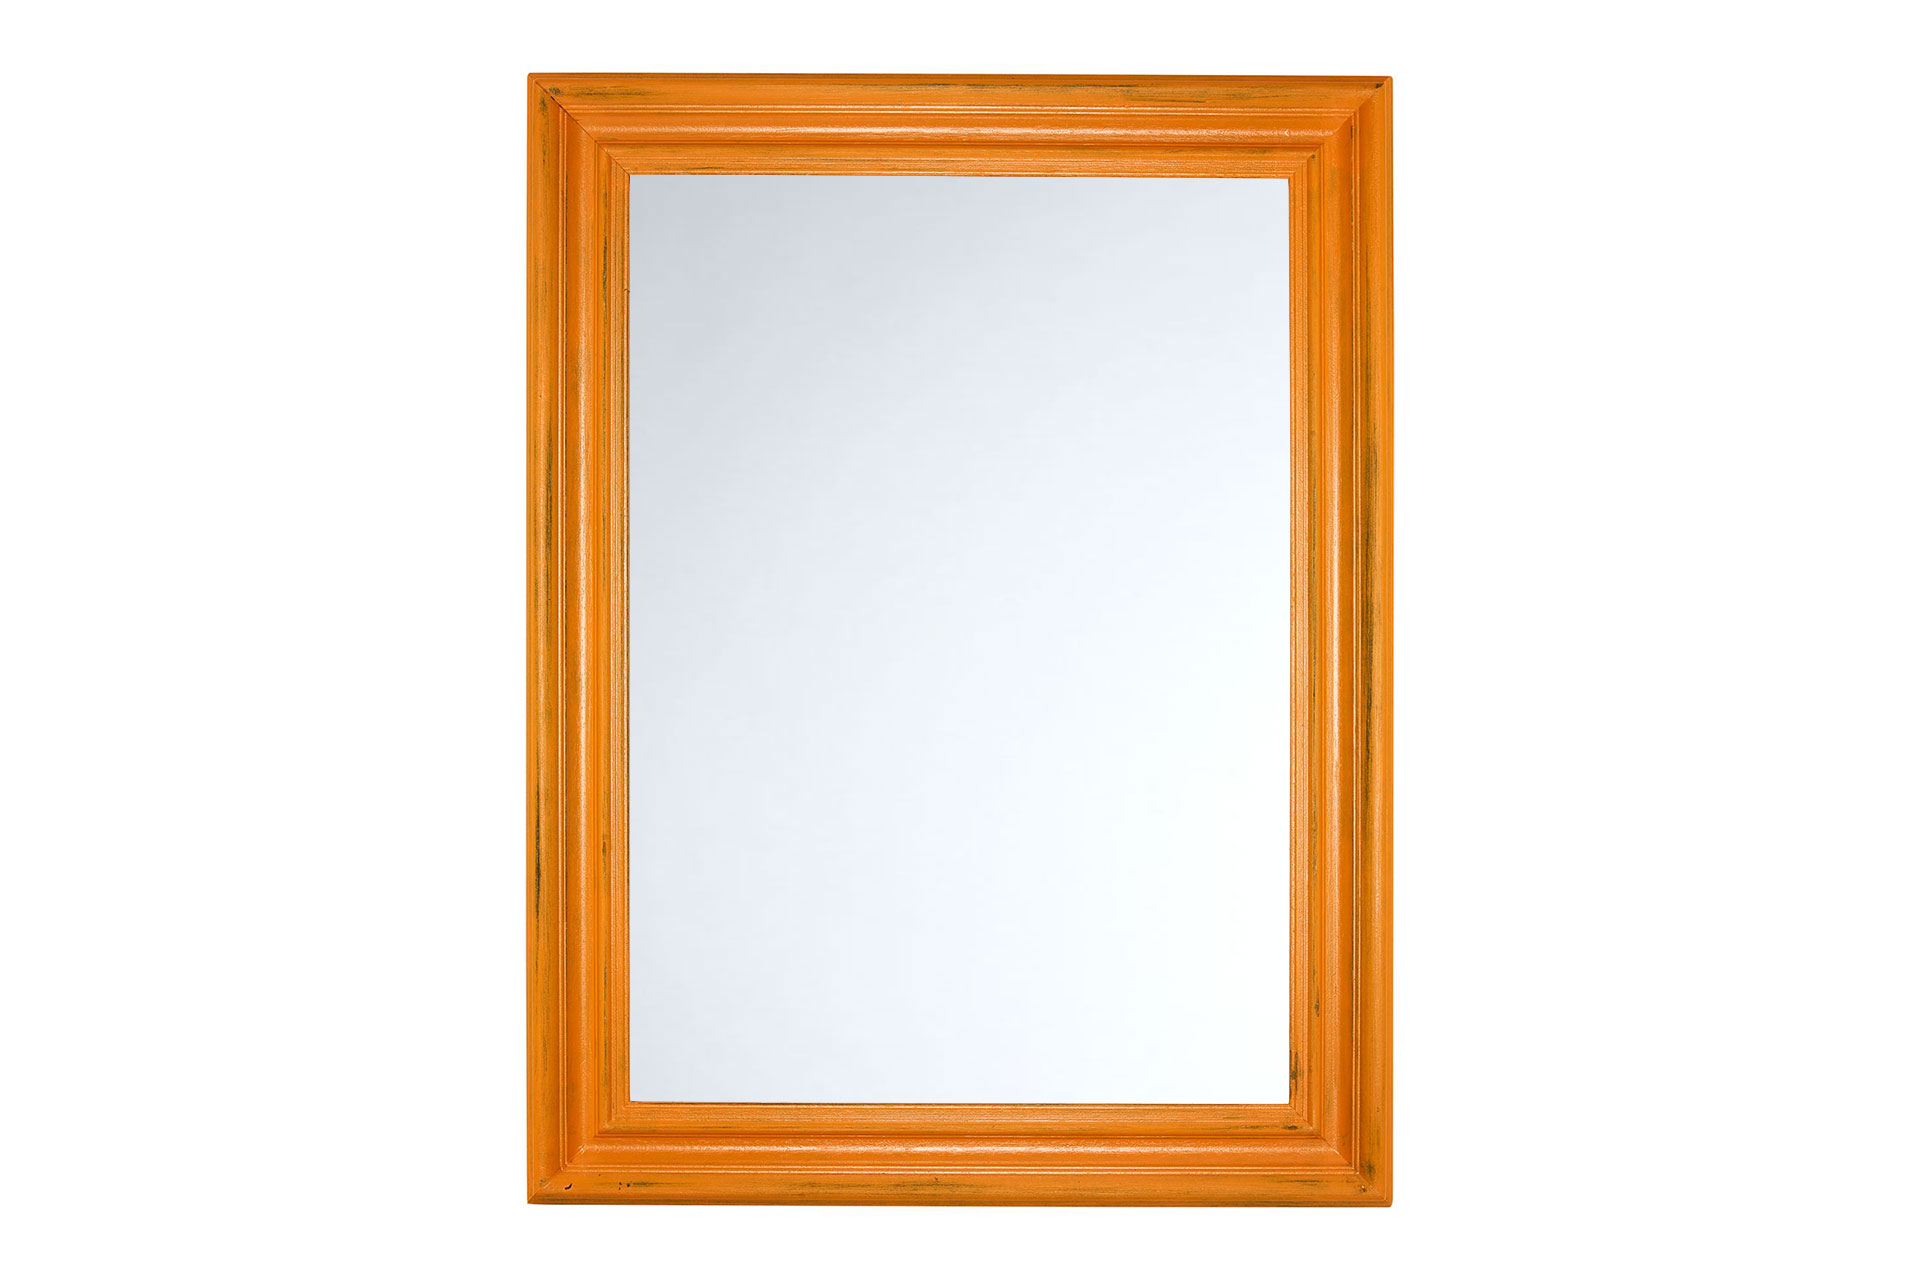 Modell Saint-Paul-de-Vence Braun/Orange, Holz, modern, Frontansicht Rahmen mit Spiegel